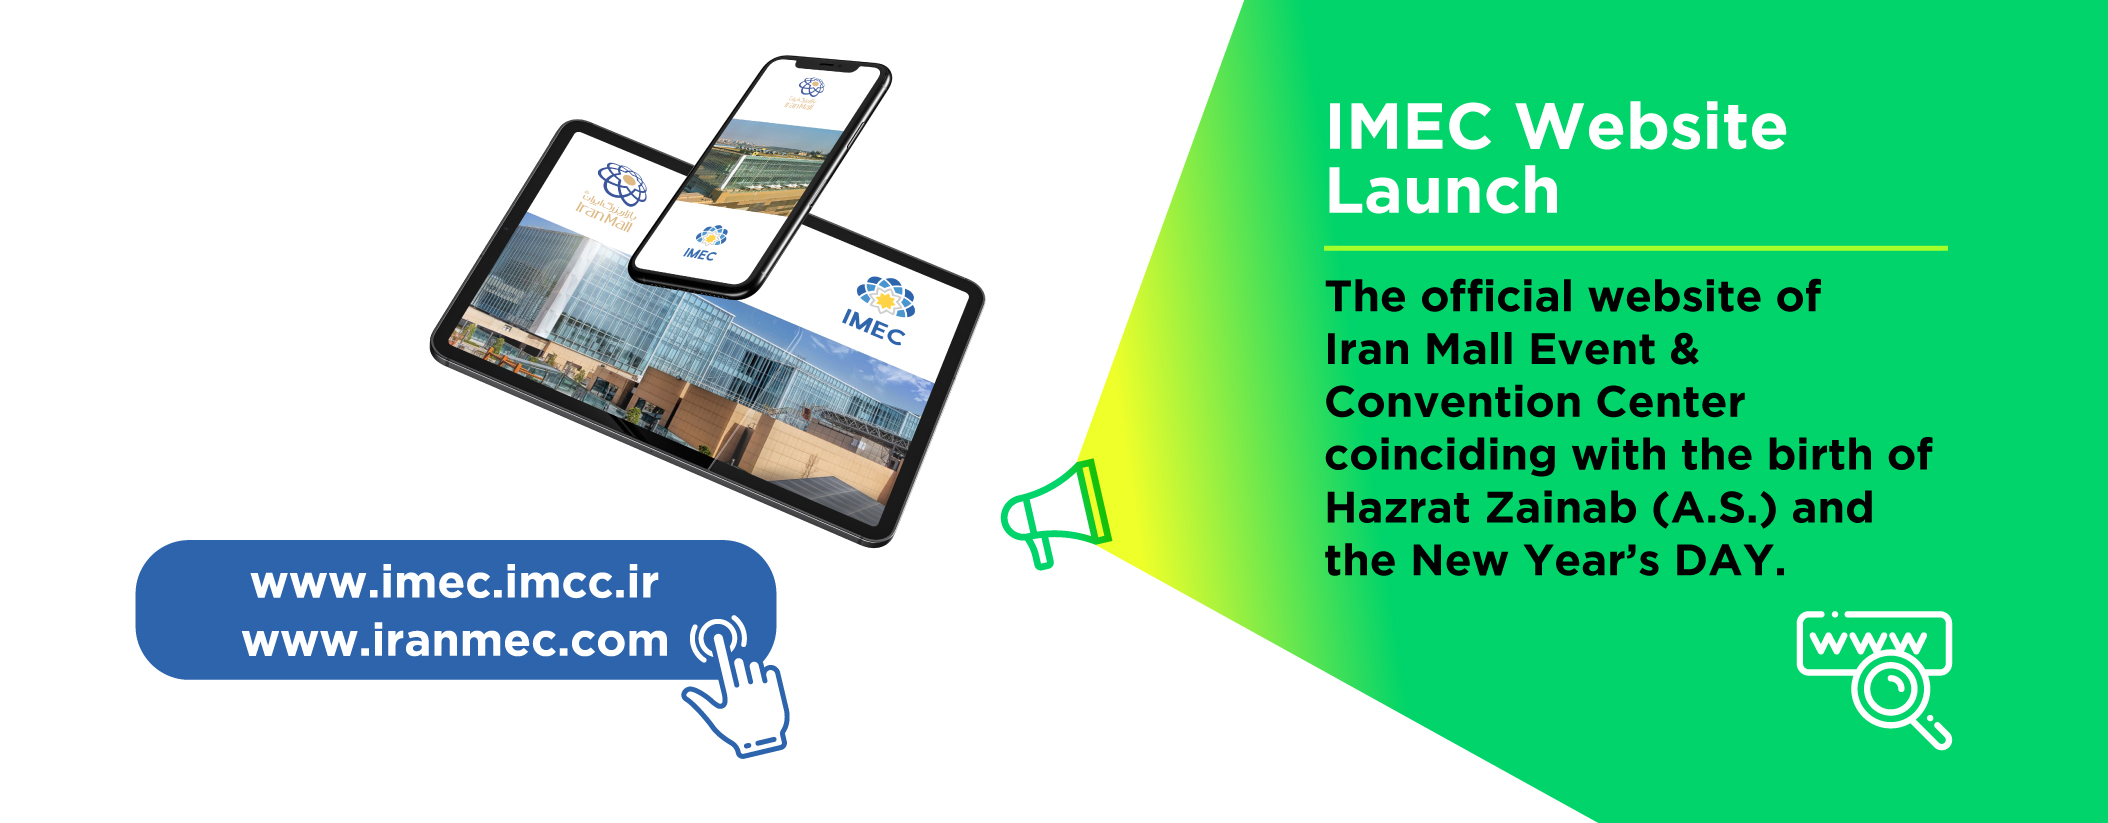 The IMEC Website Launch